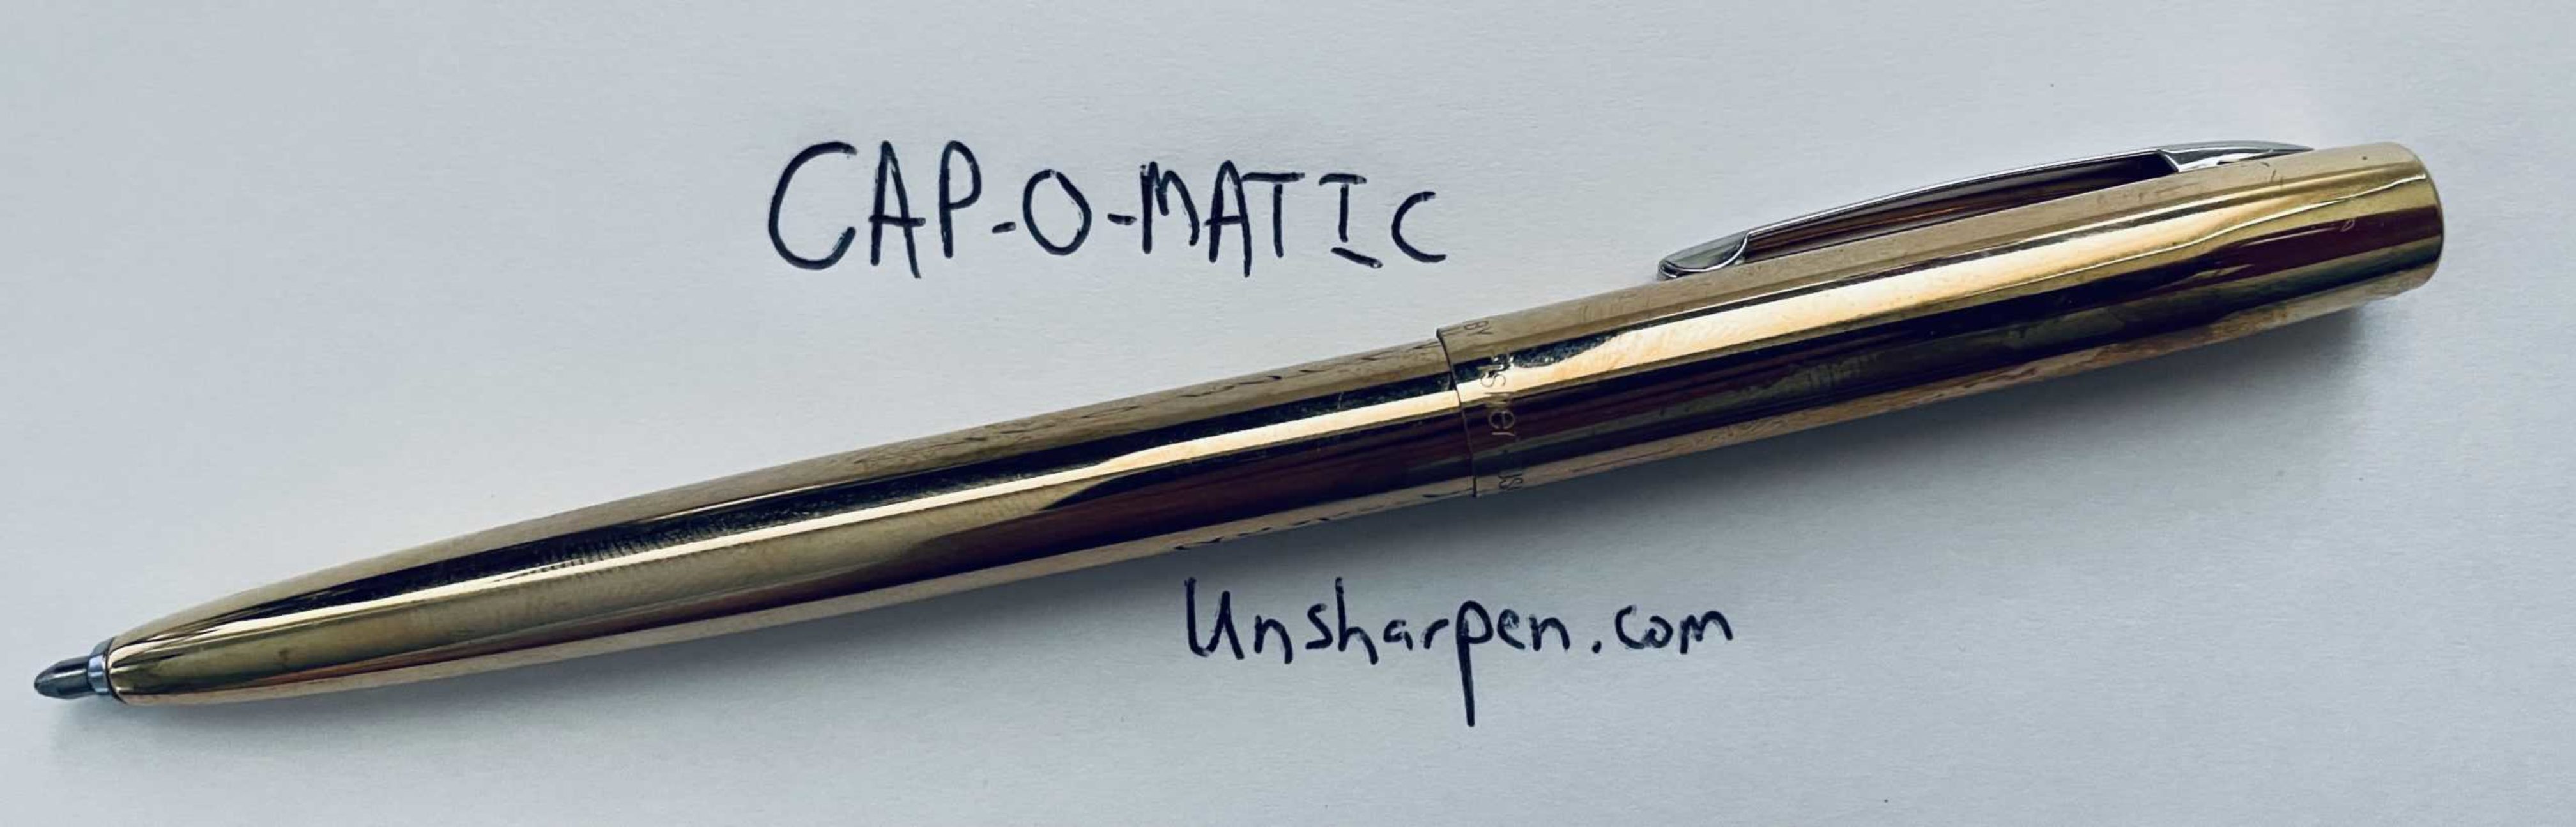 Raw Brass Cap-O-Matic Ballpoint Pen Fisher Space Pen #M4RAW 